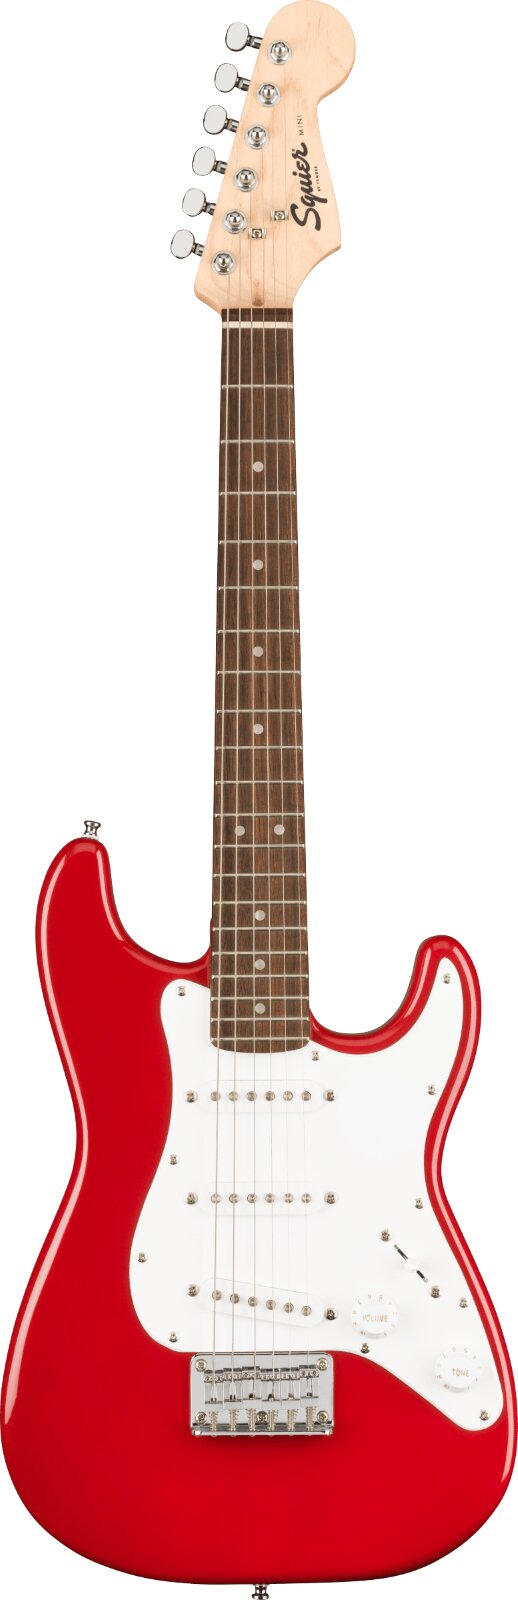 Squier Mini Stratocaster Laurel Griffbrett Dakota Red : photo 1